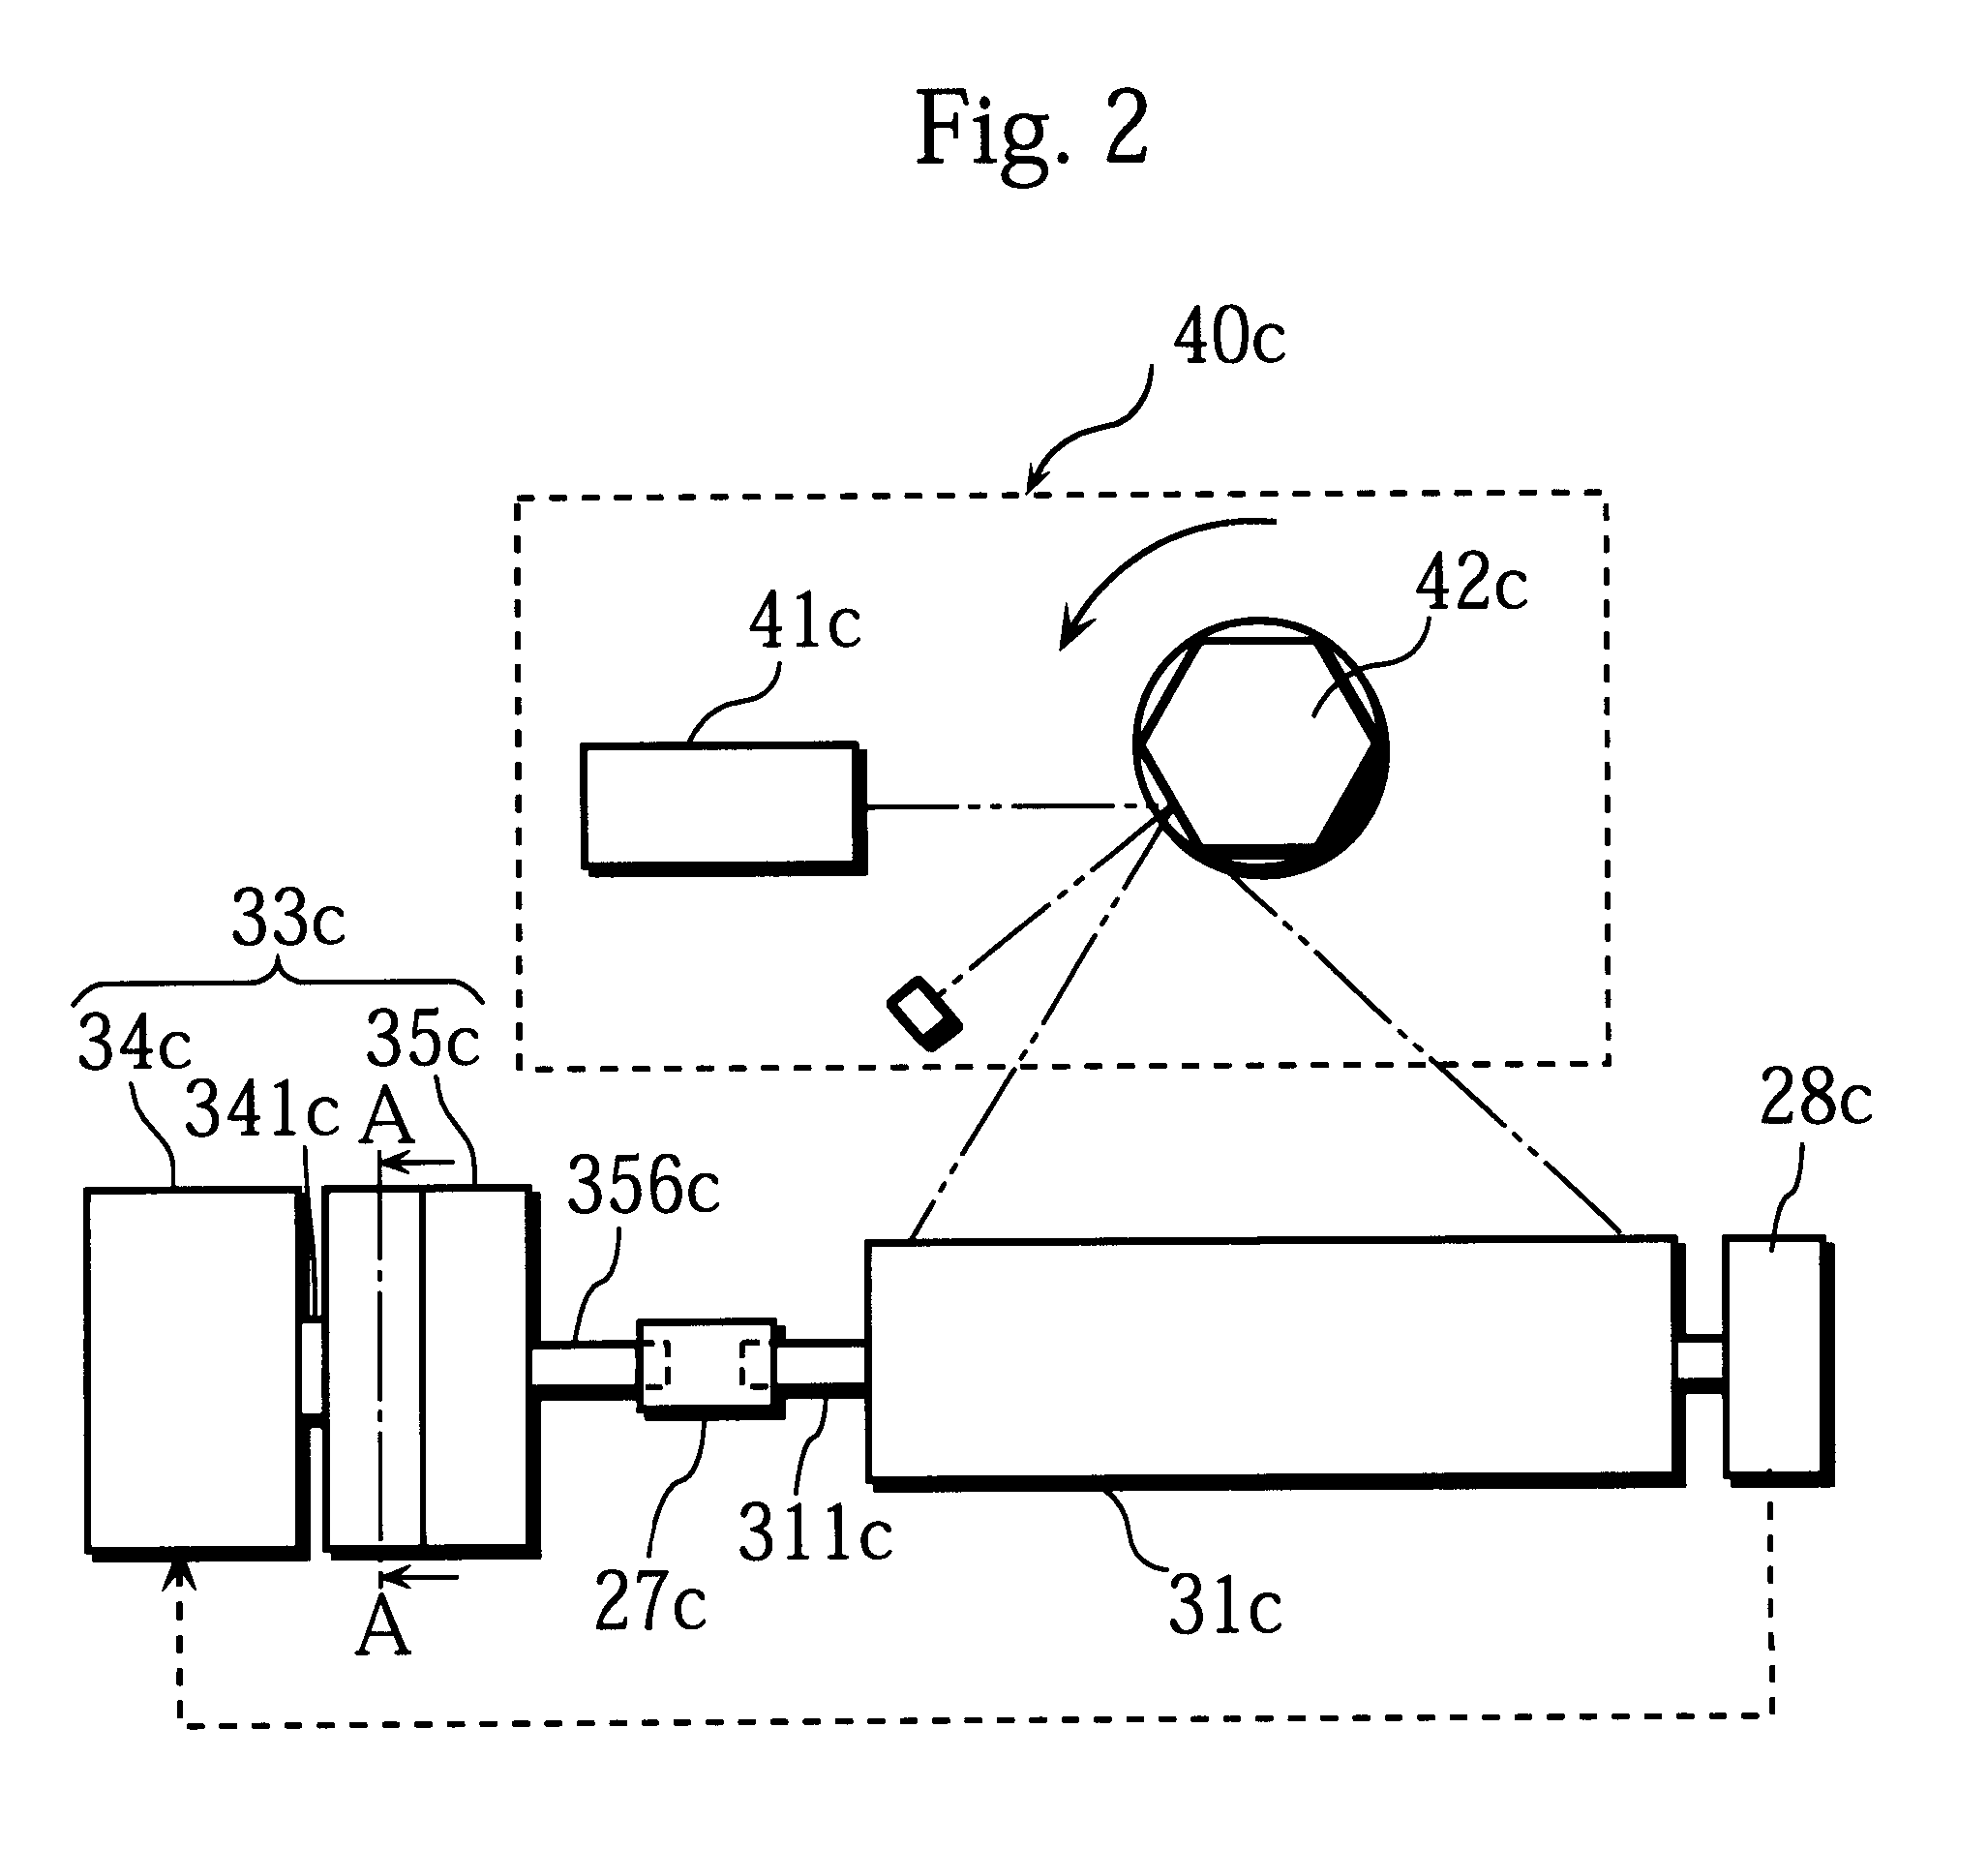 Rotator driving device, image forming apparatus using the rotator driving device, and method of driving rotator